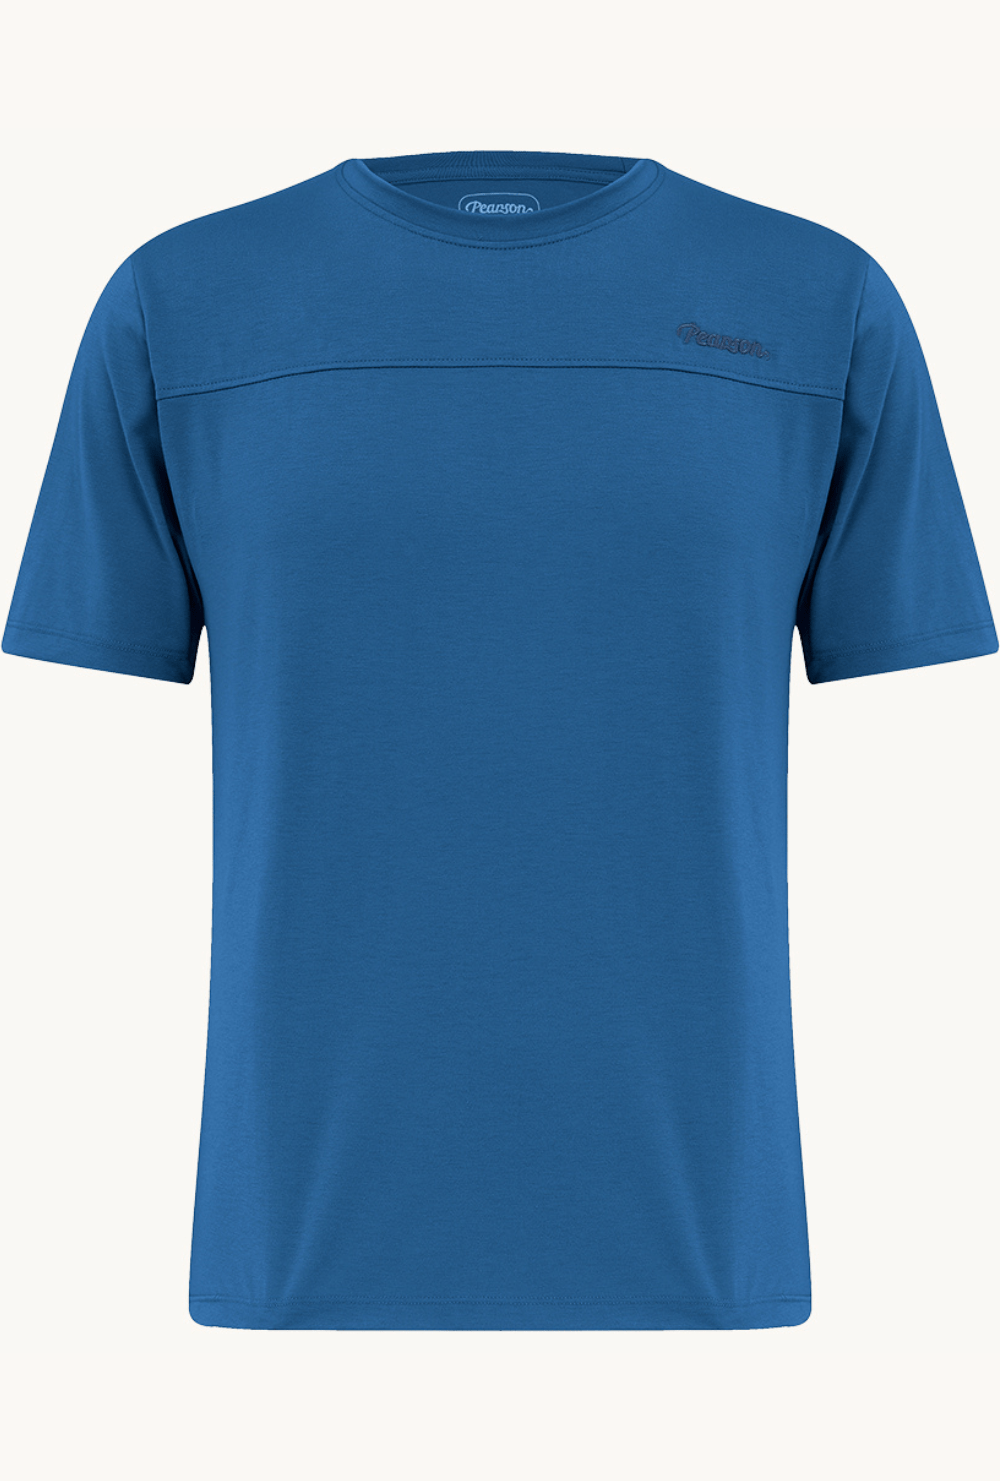 Pearson 1860  High DaysandHolidays - Cycling T-shirt Mid Blue  Mid Blue / X-large